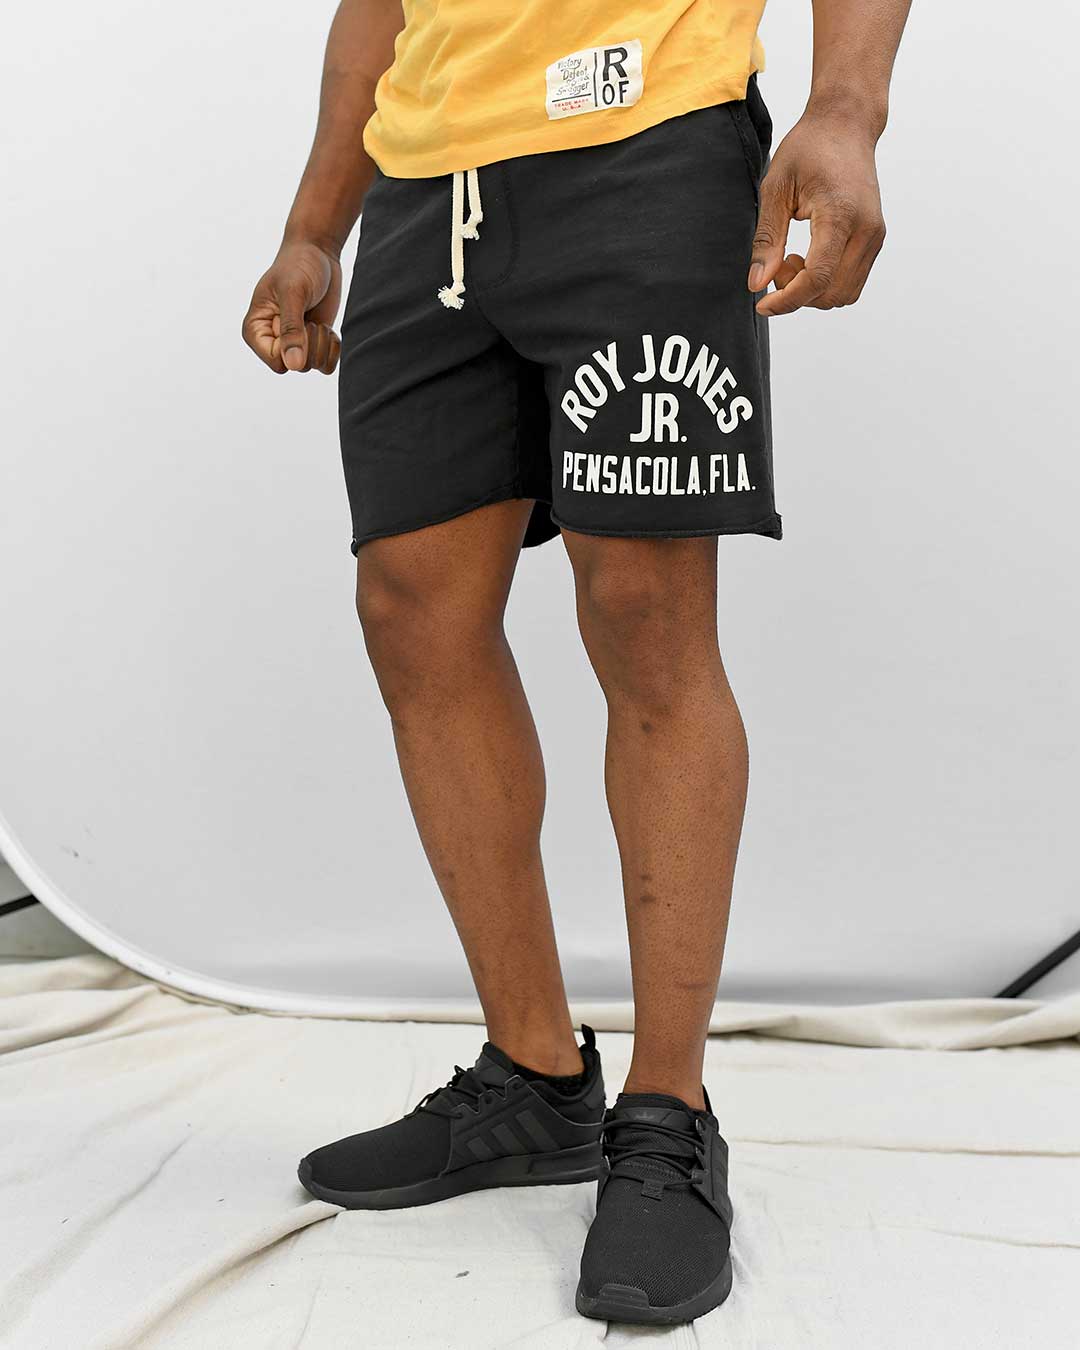 Roy Jones Jr. Boxing Pensacola Shorts - Roots of Fight